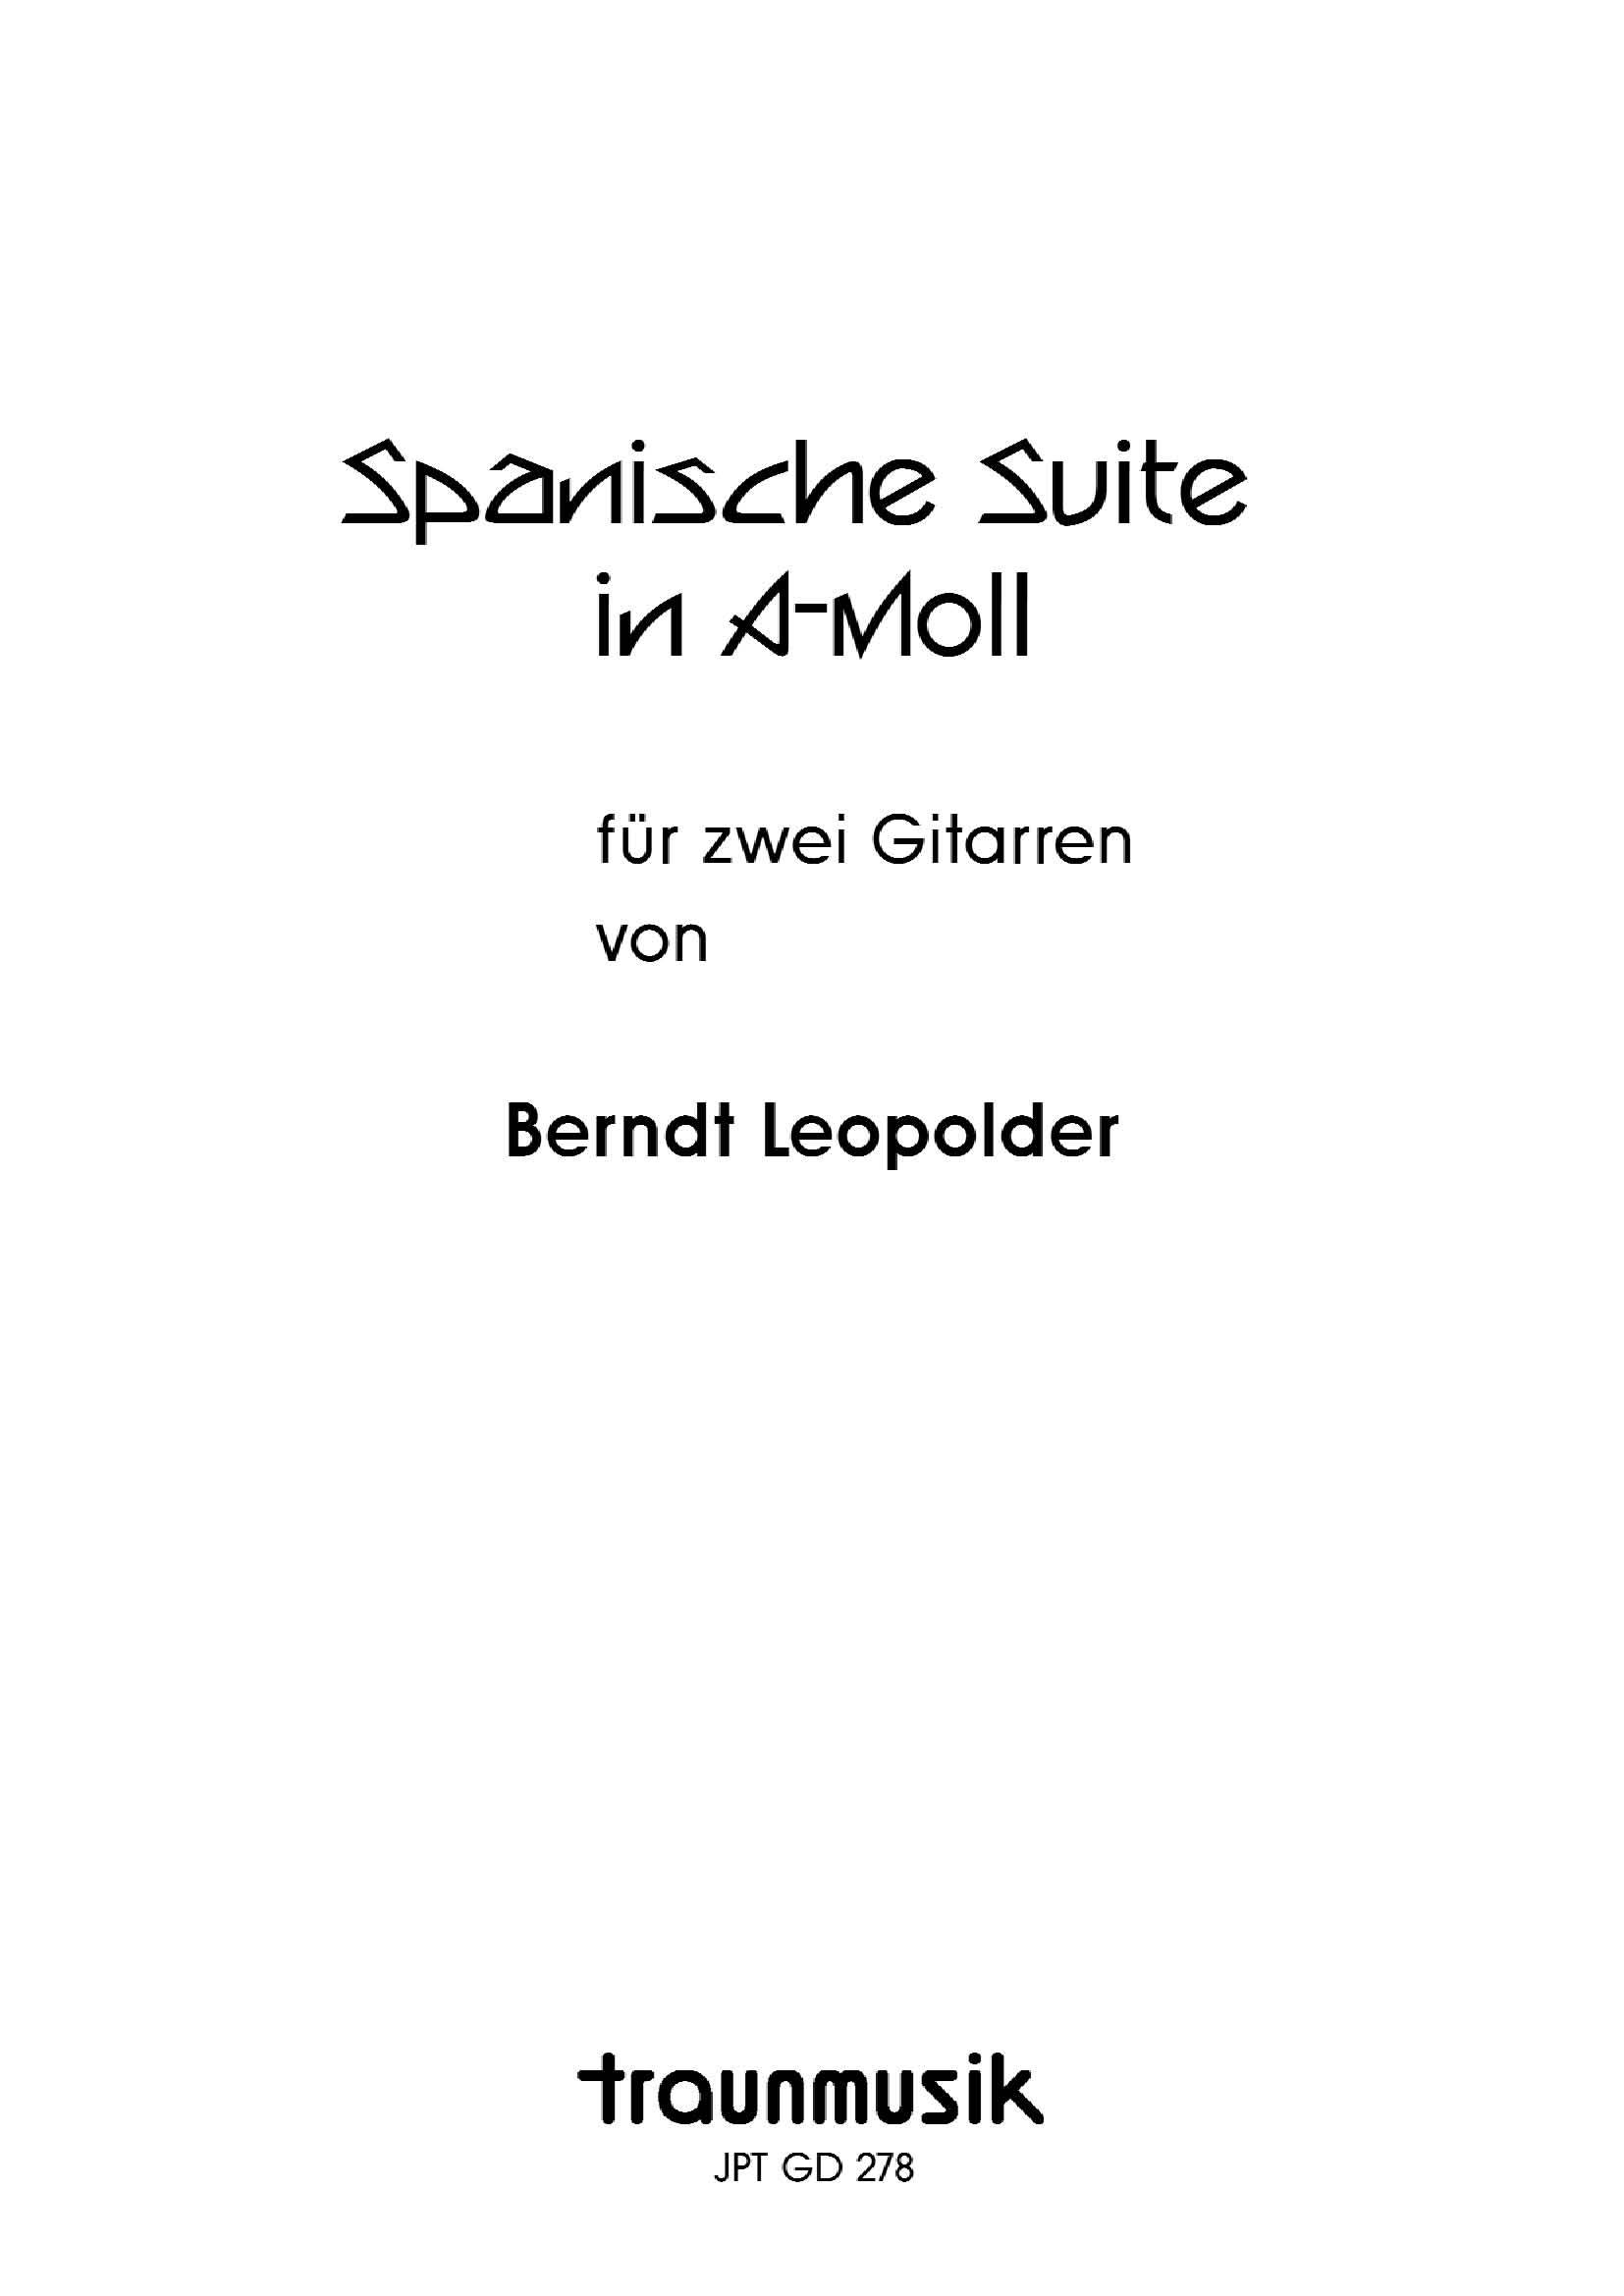 Spanische Suite in A-Moll / B. Leopolder